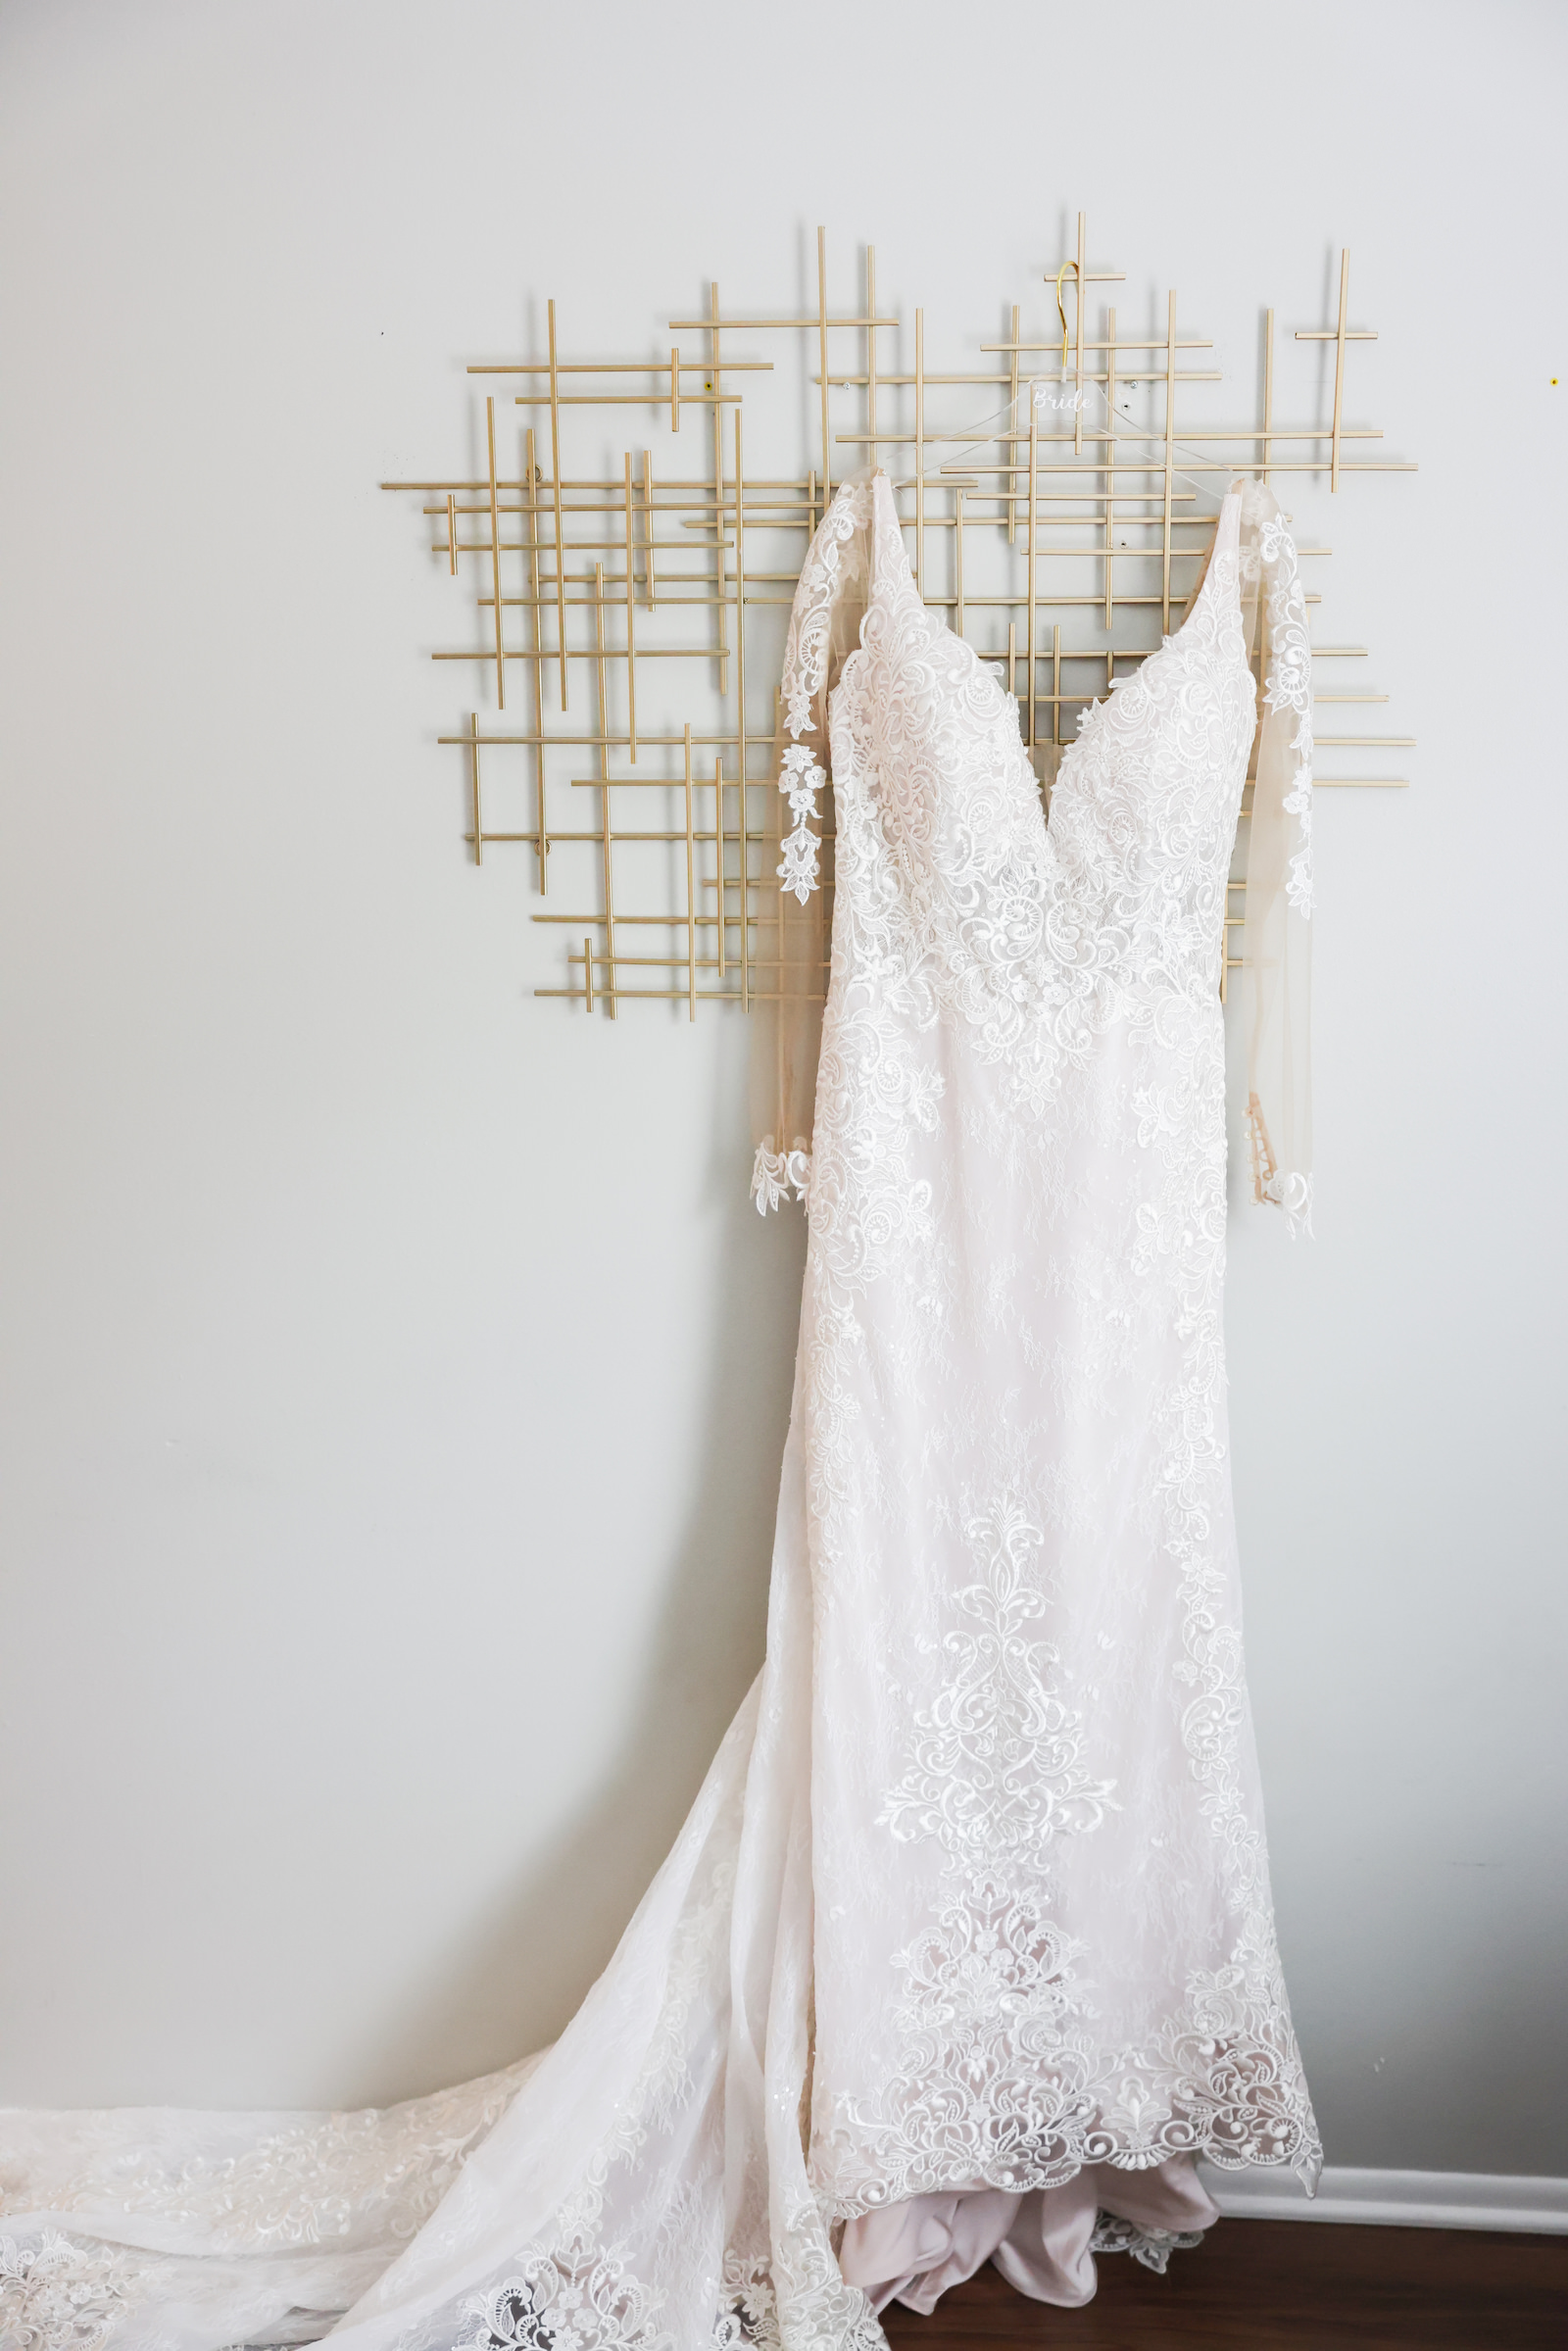 Modern Romantic Wedding, Lace and Illusion Long Sleeved Wedding Dress | Tampa Bay Wedding Photographer Lifelong Photography Studio